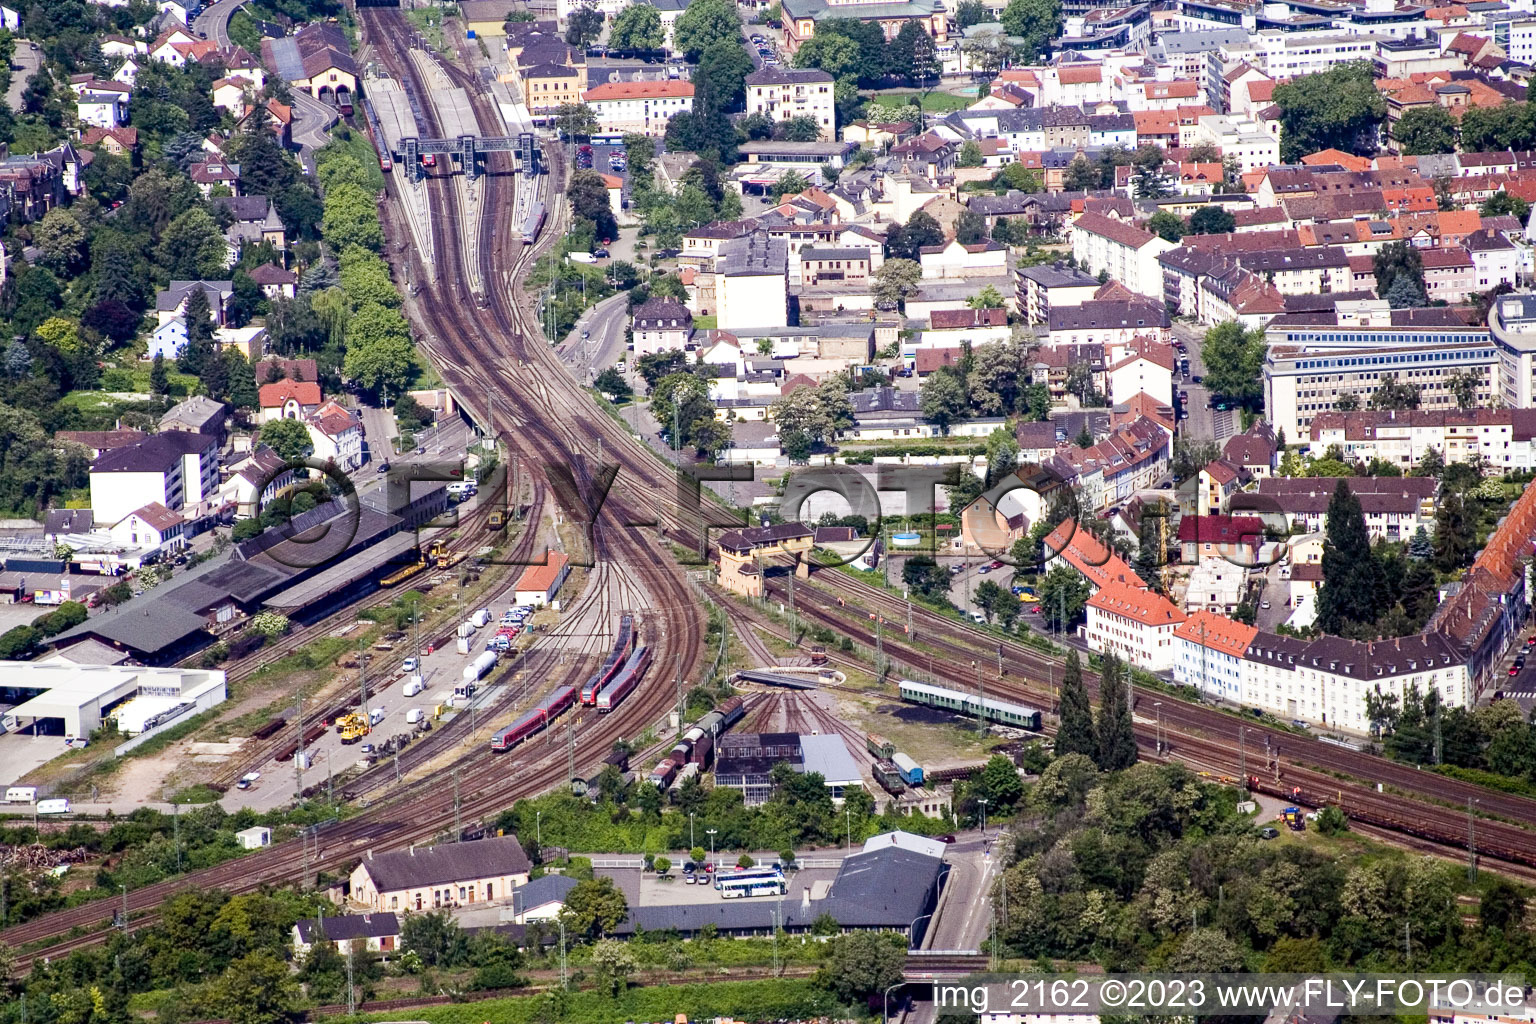 Track triangle in Neustadt an der Weinstraße in the state Rhineland-Palatinate, Germany